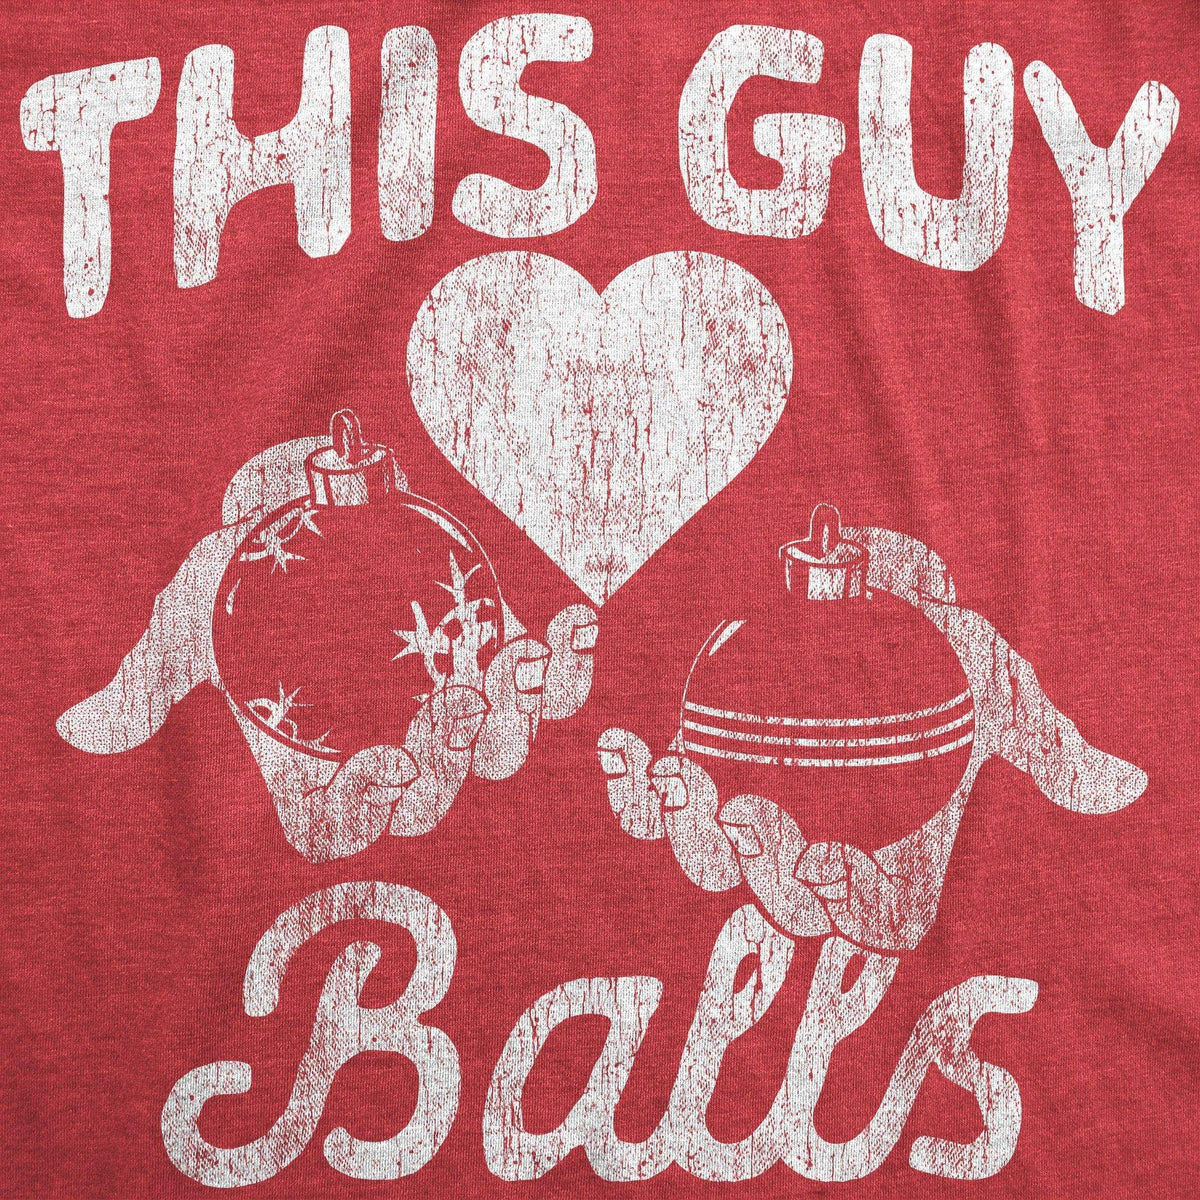 This Guy Loves Balls Men&#39;s Tshirt - Crazy Dog T-Shirts